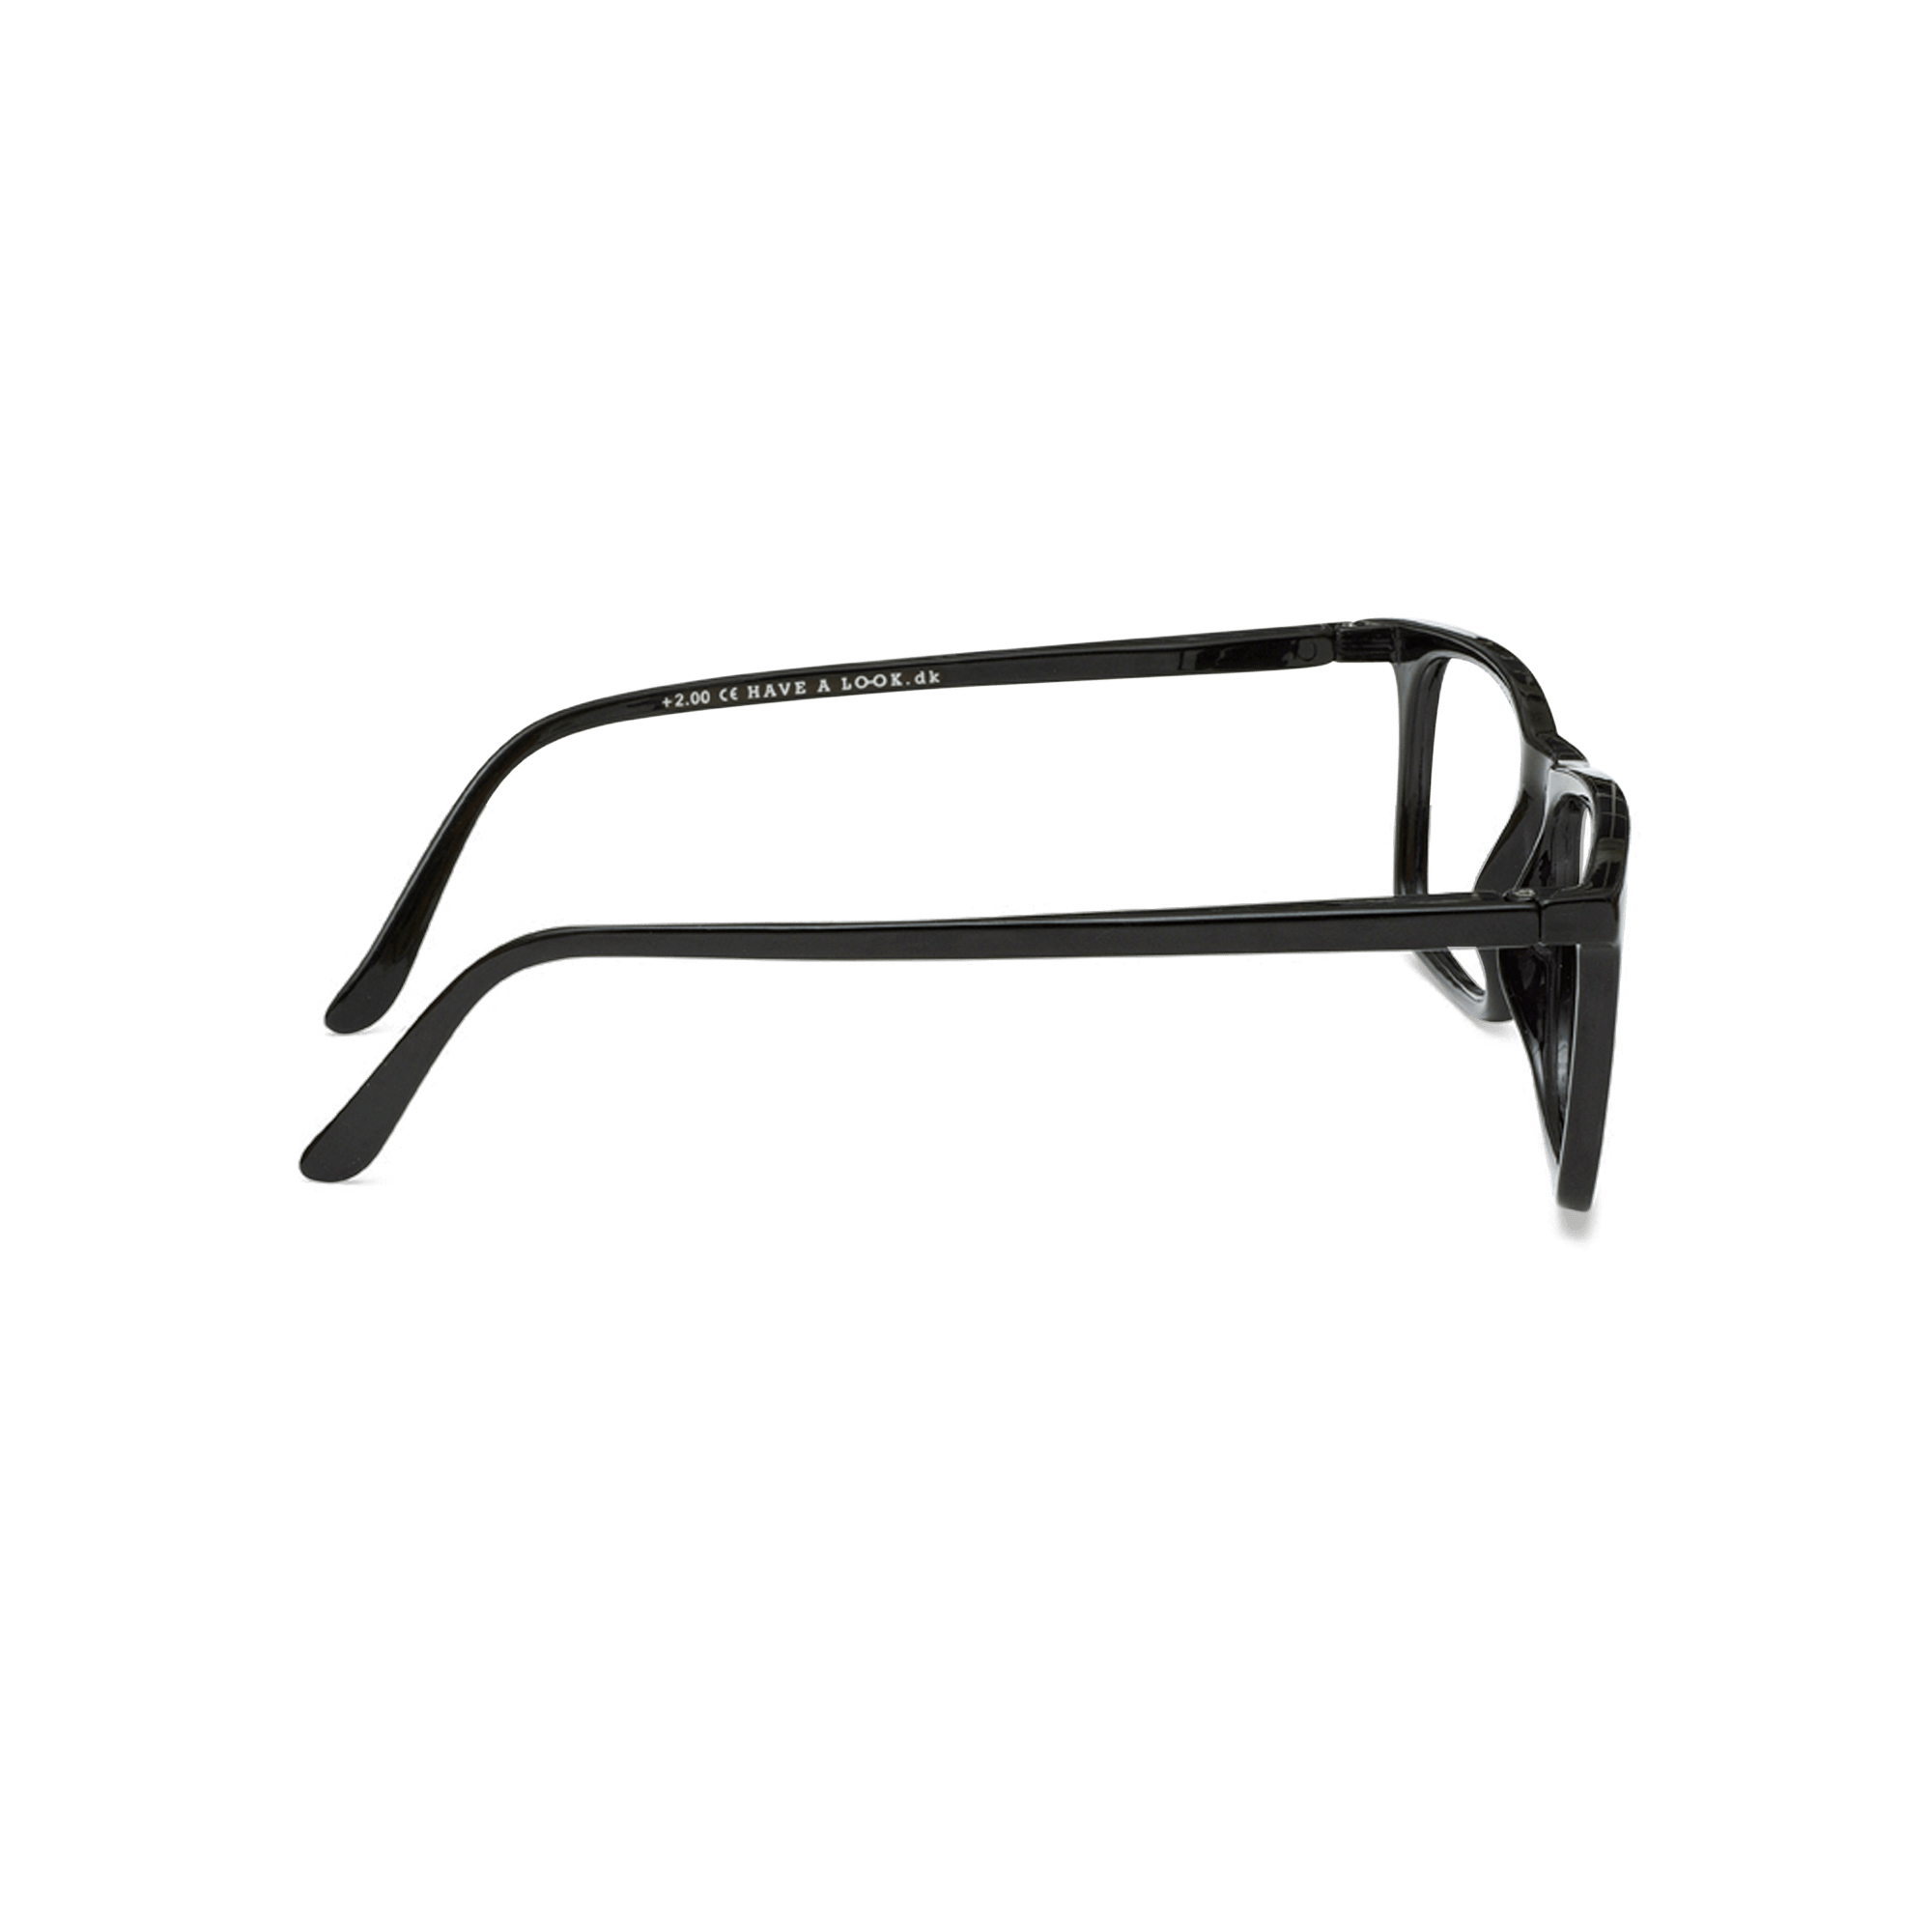 Minusglasögon Type A - black